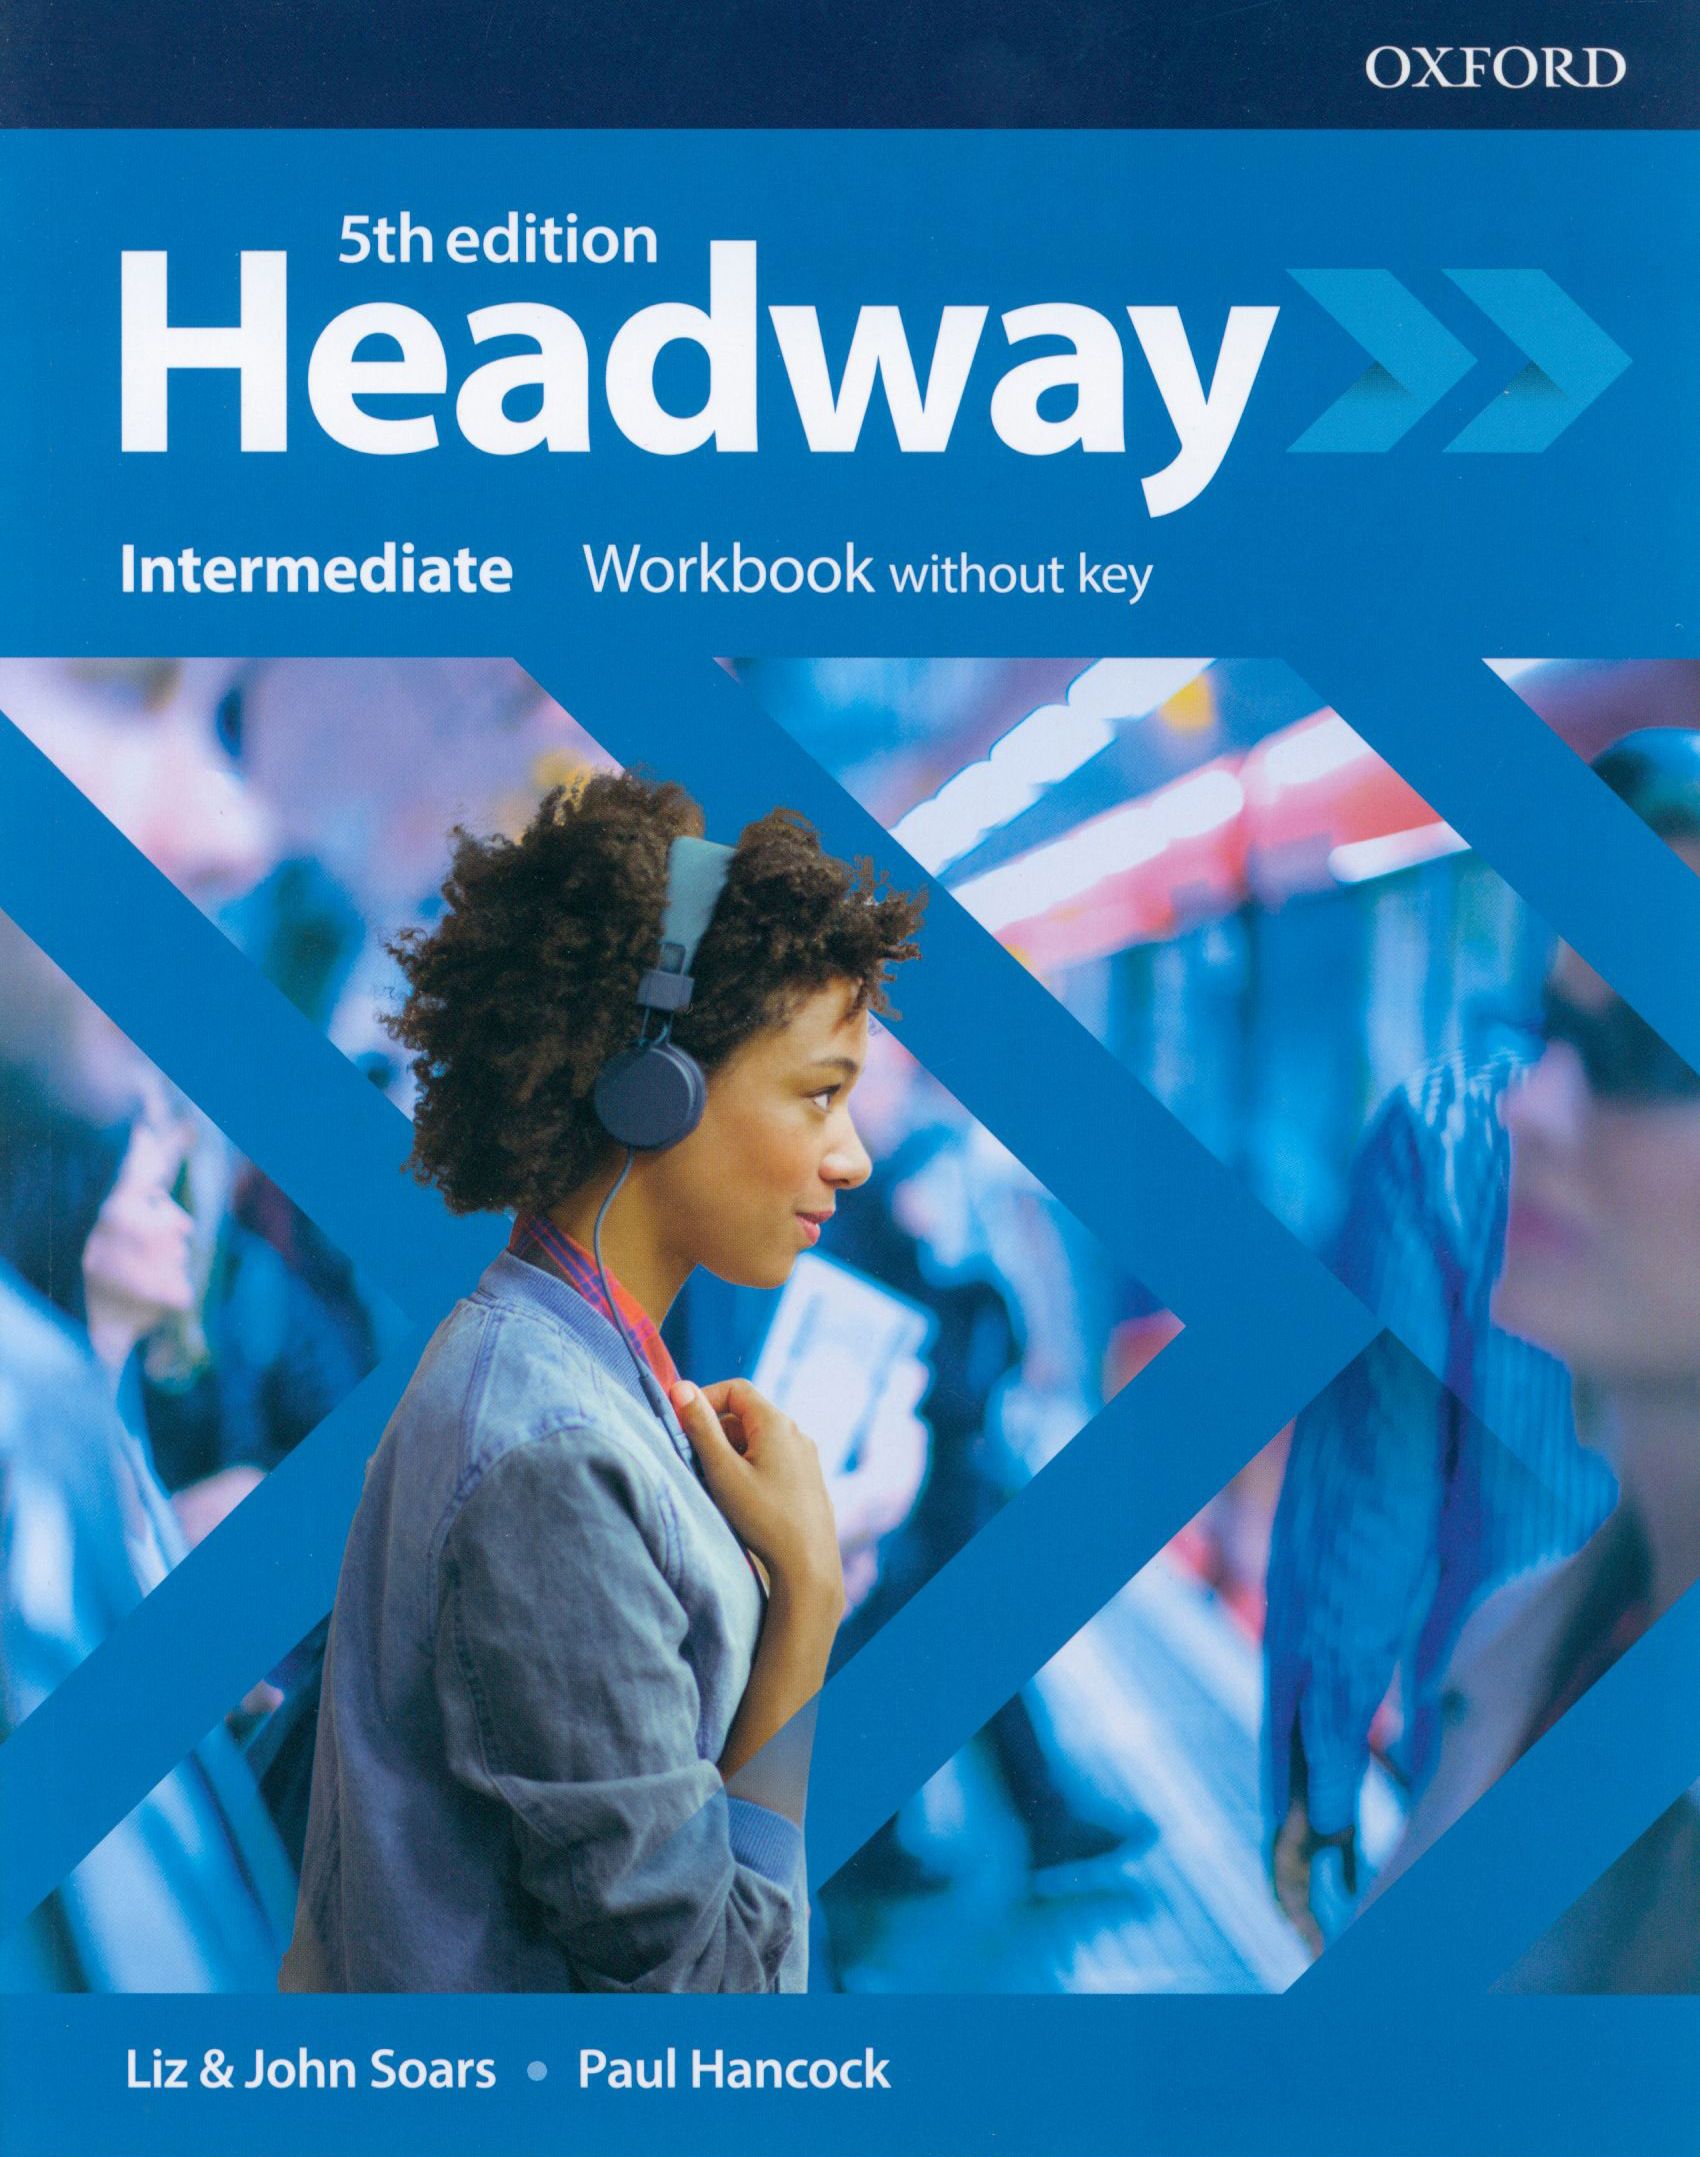 New headway intermediate workbook. Oxford 5th Edition Headway. Headway, 5th Edition - 2019. Headway pre-Intermediate 5th Edition. Headway books 5th Edition.